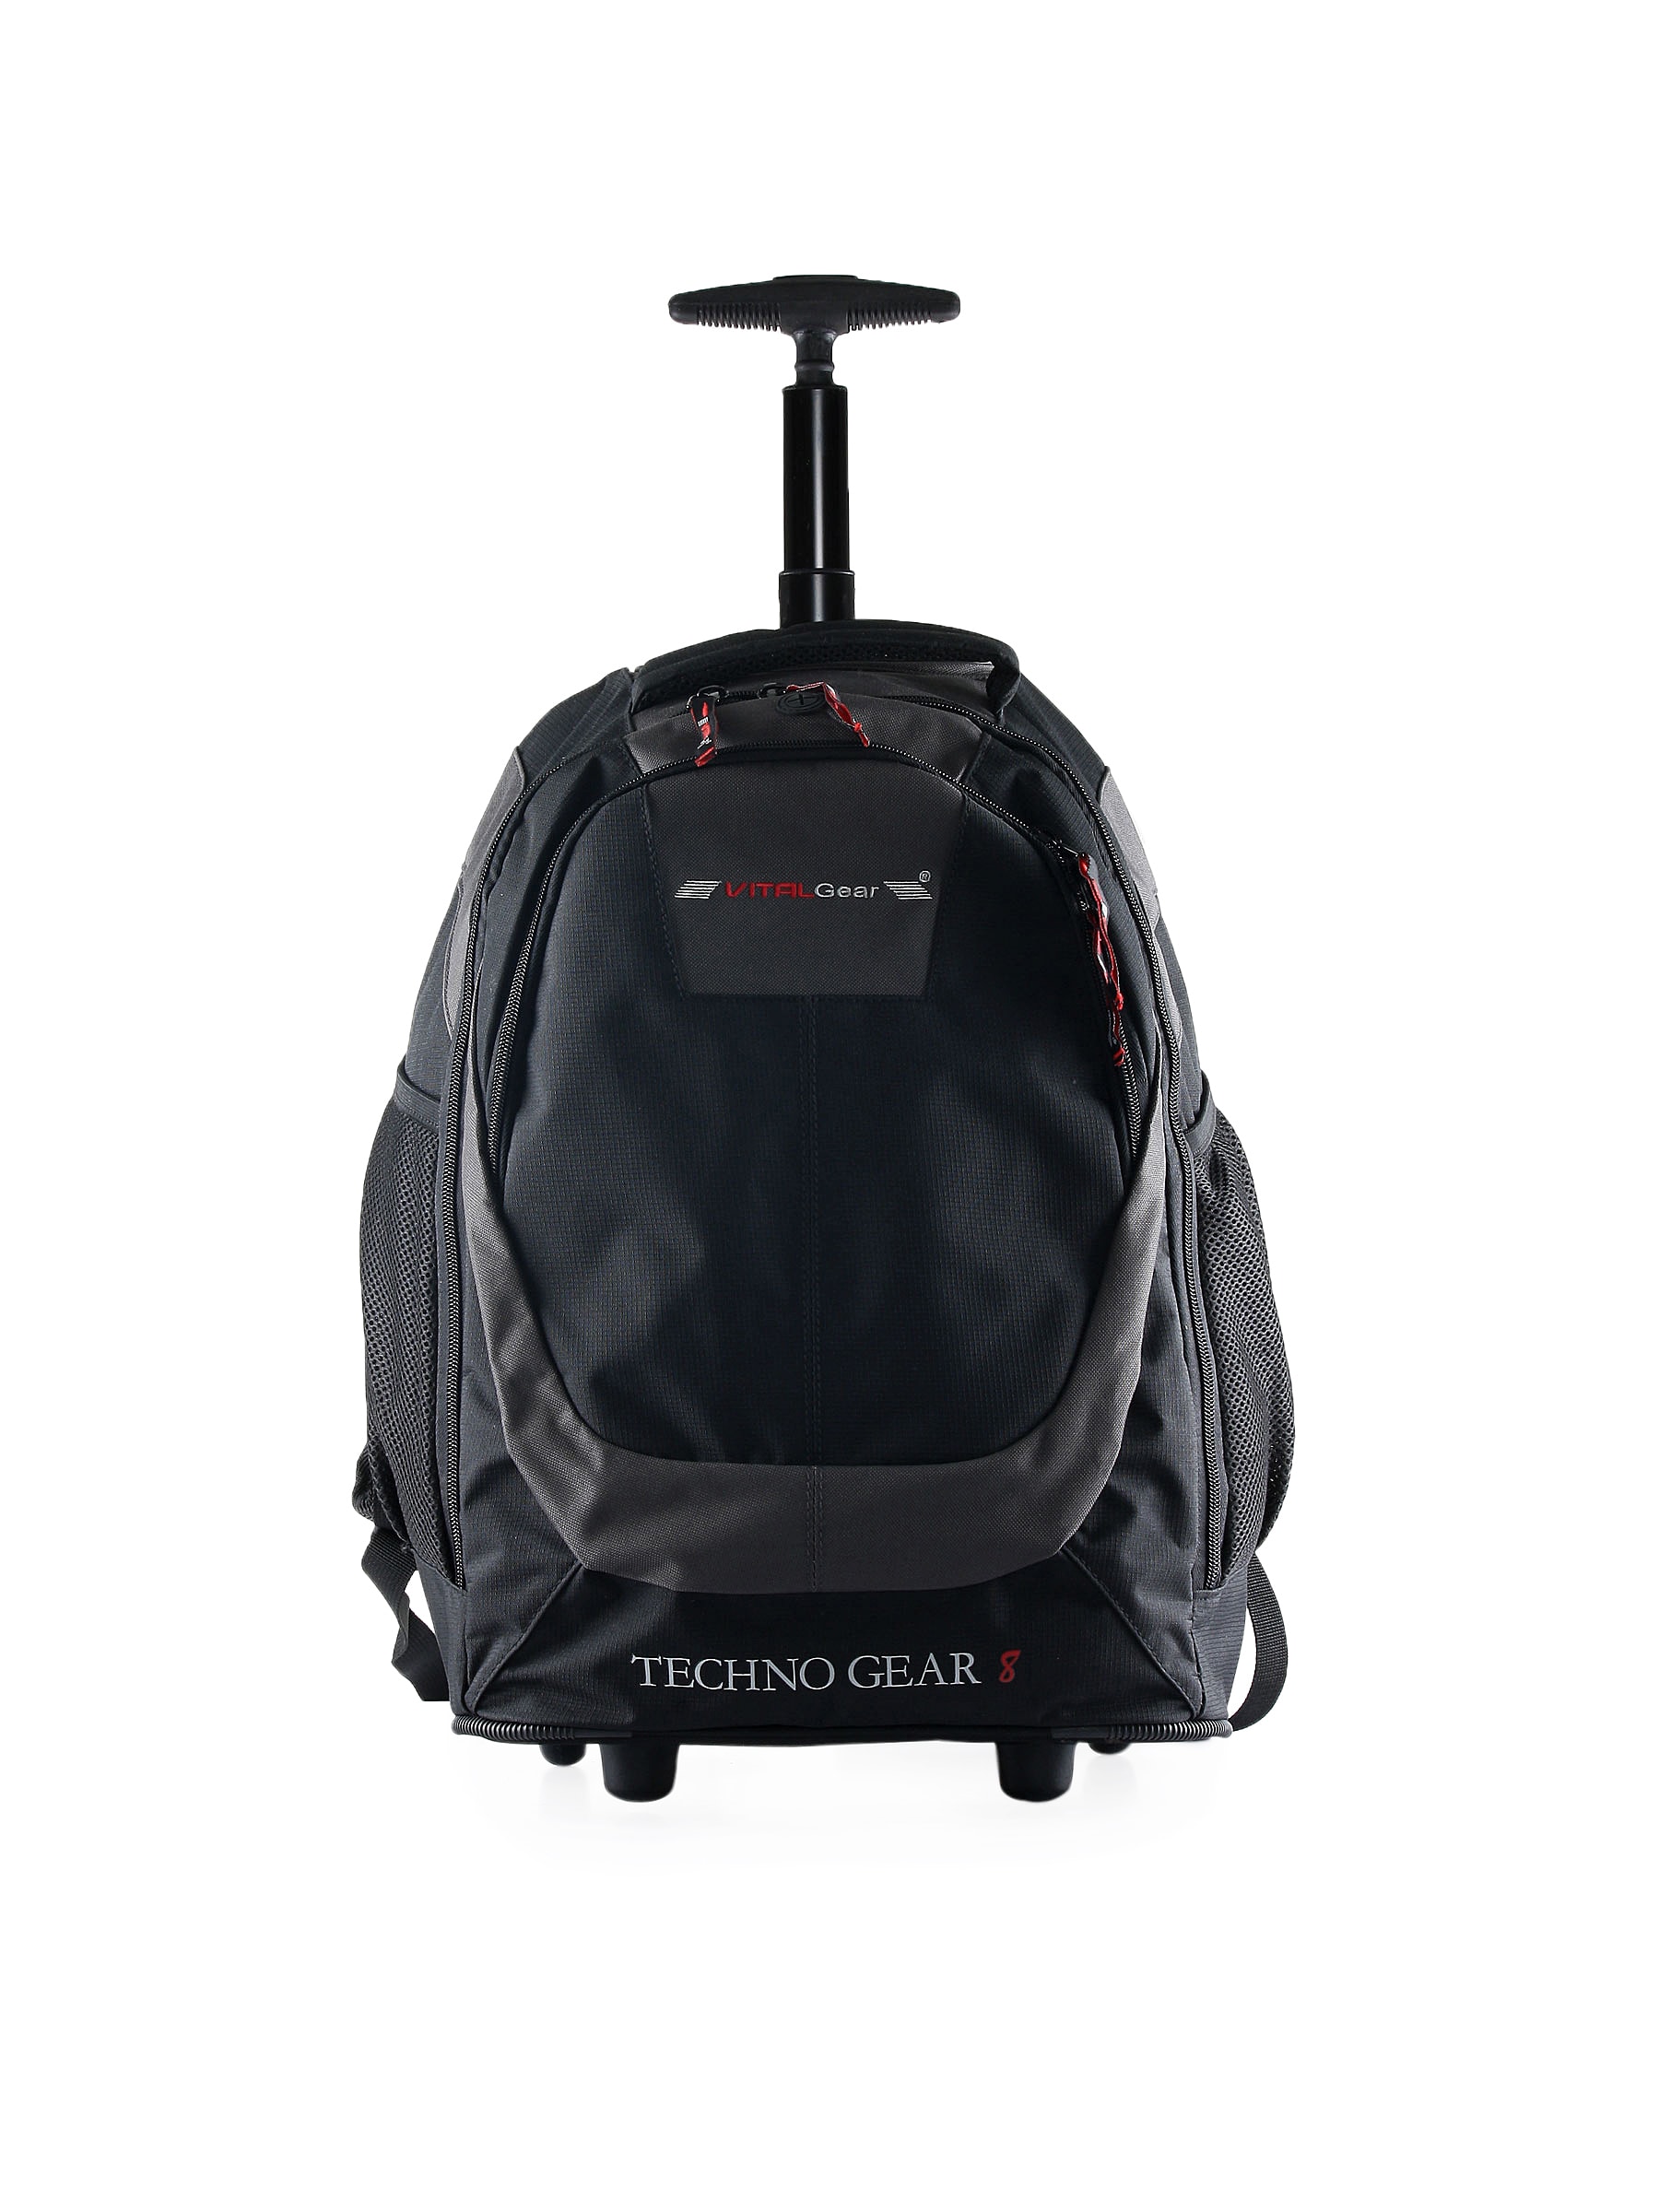 Vital Gear Unisex Black Bag